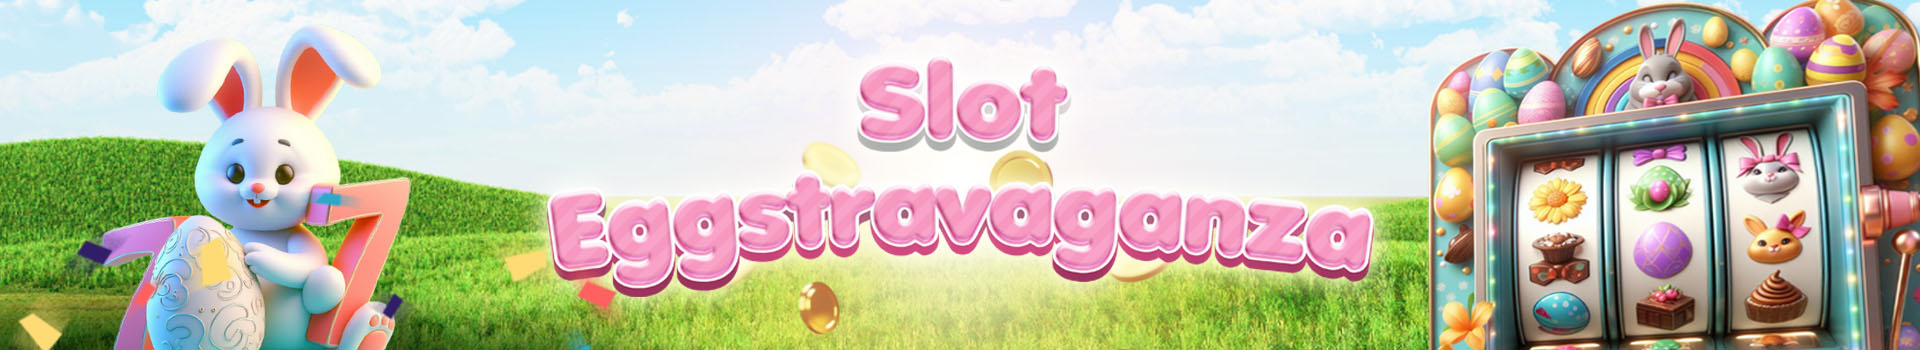 slot-eggstravaganza banner